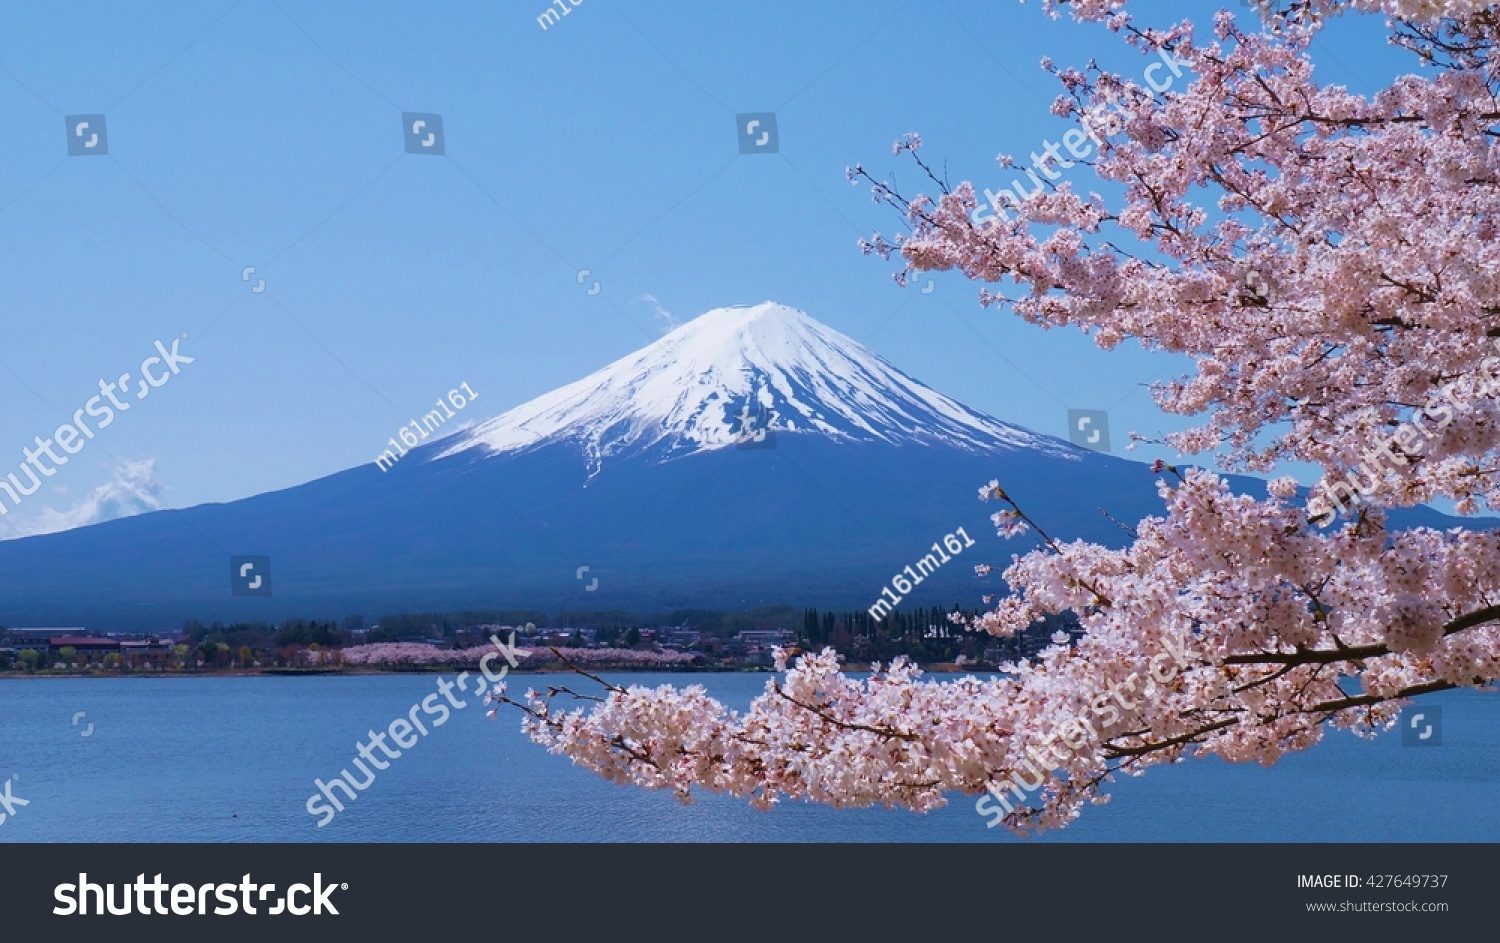 Mount Fuji and cherry-blossoms which are viewed from lake Kawaguchiko, Yamanashi, Japan #427649737